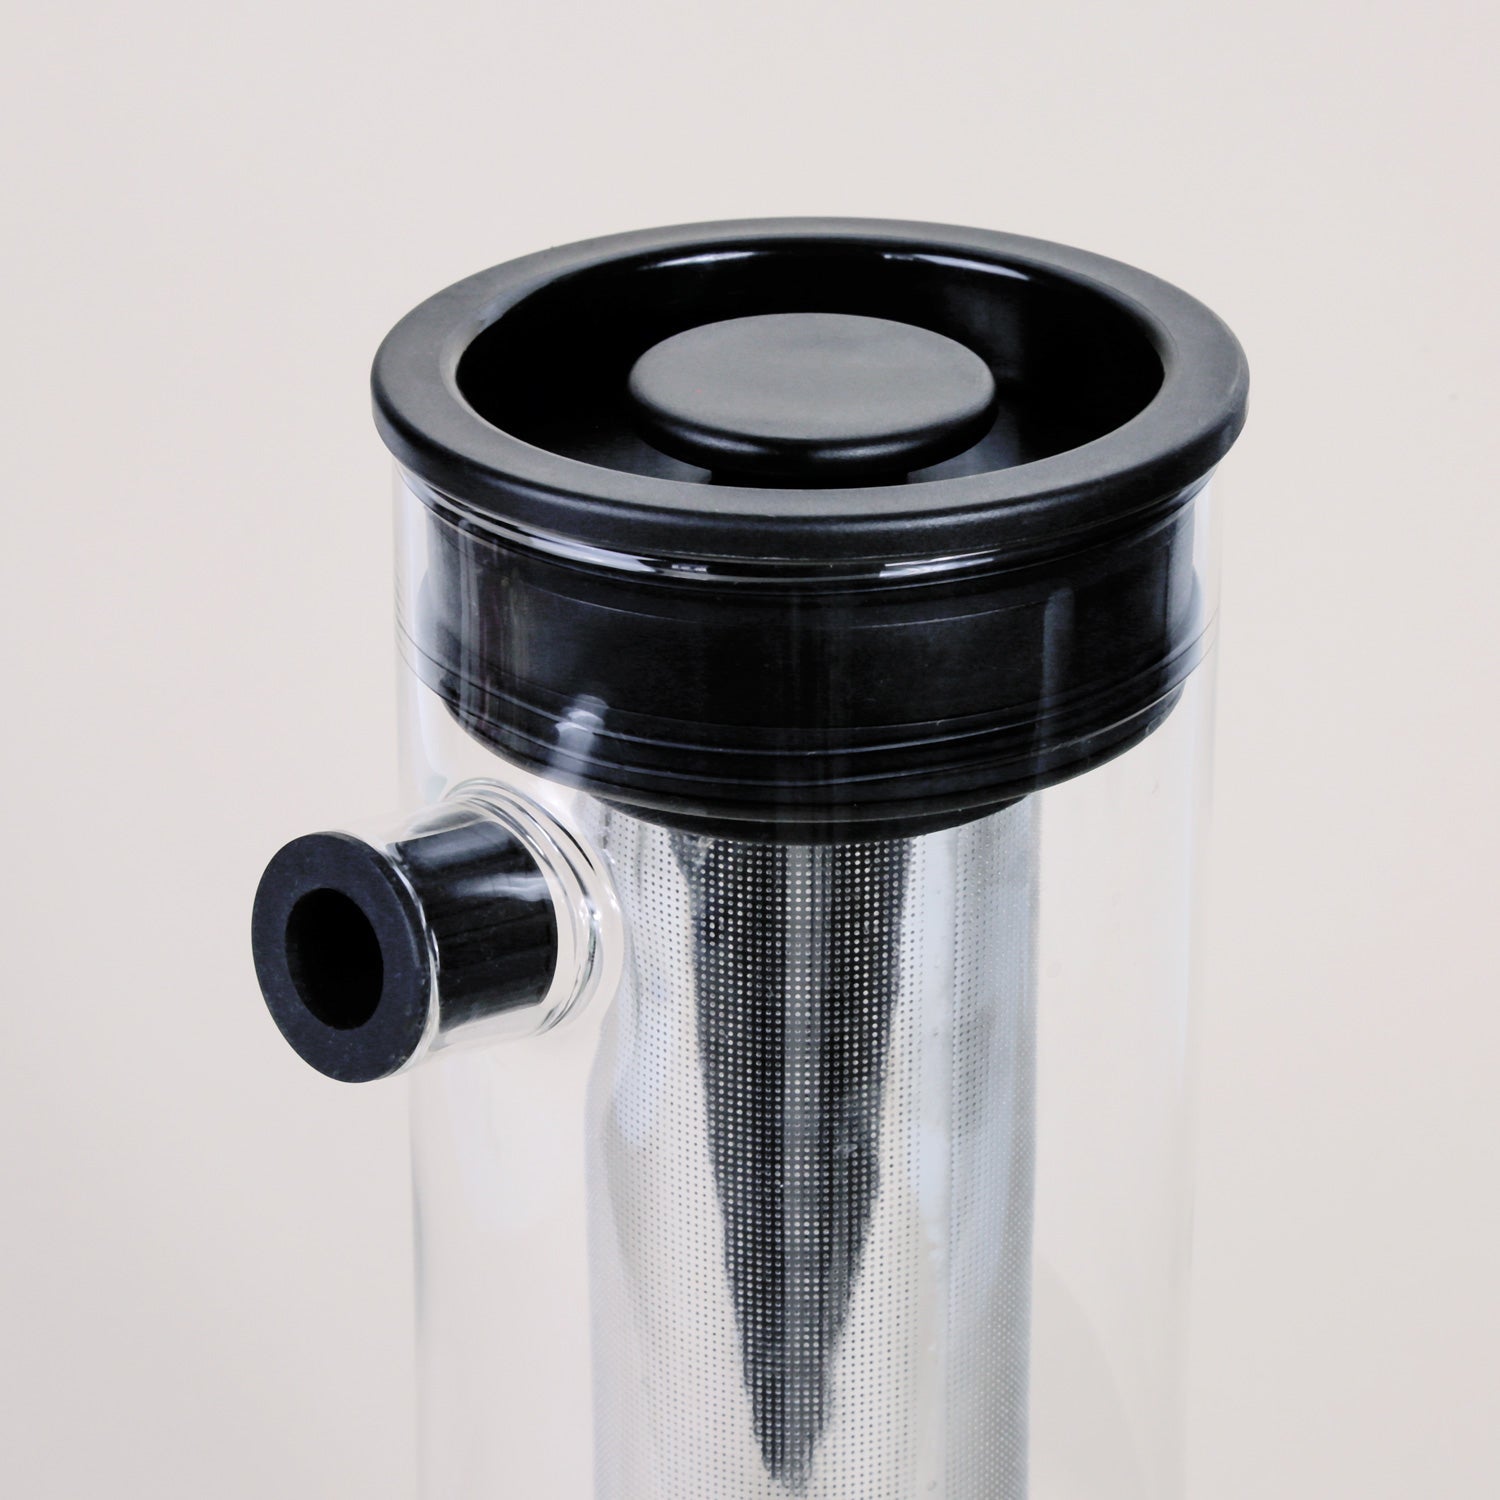 Glass Iced Tea Jug, Tea Pitcher with Filter